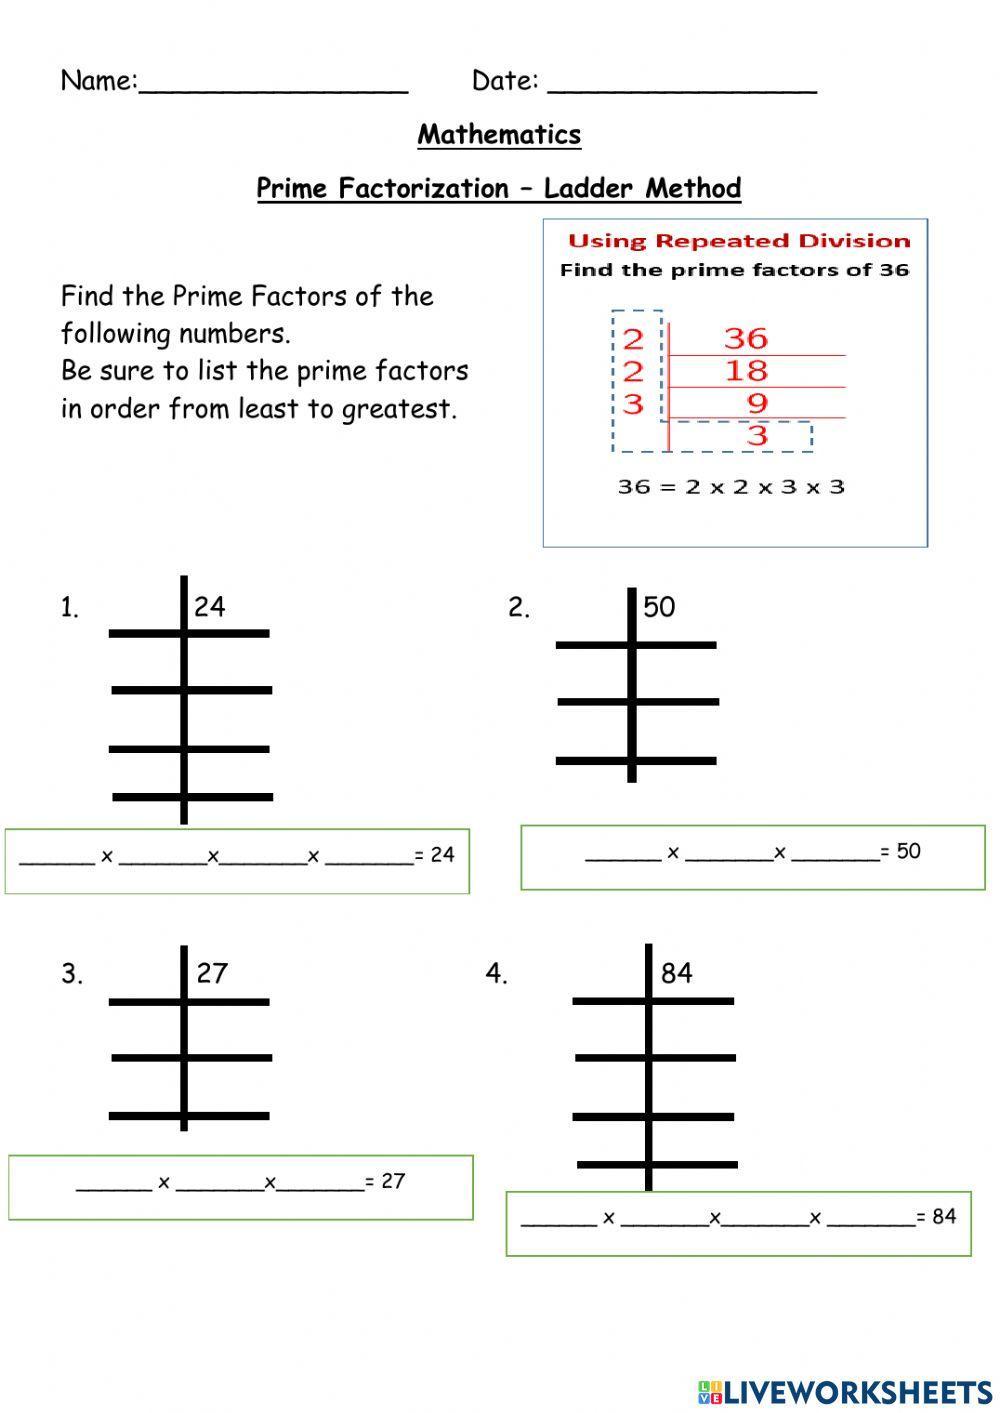 Prime Factorization - Ladder Method